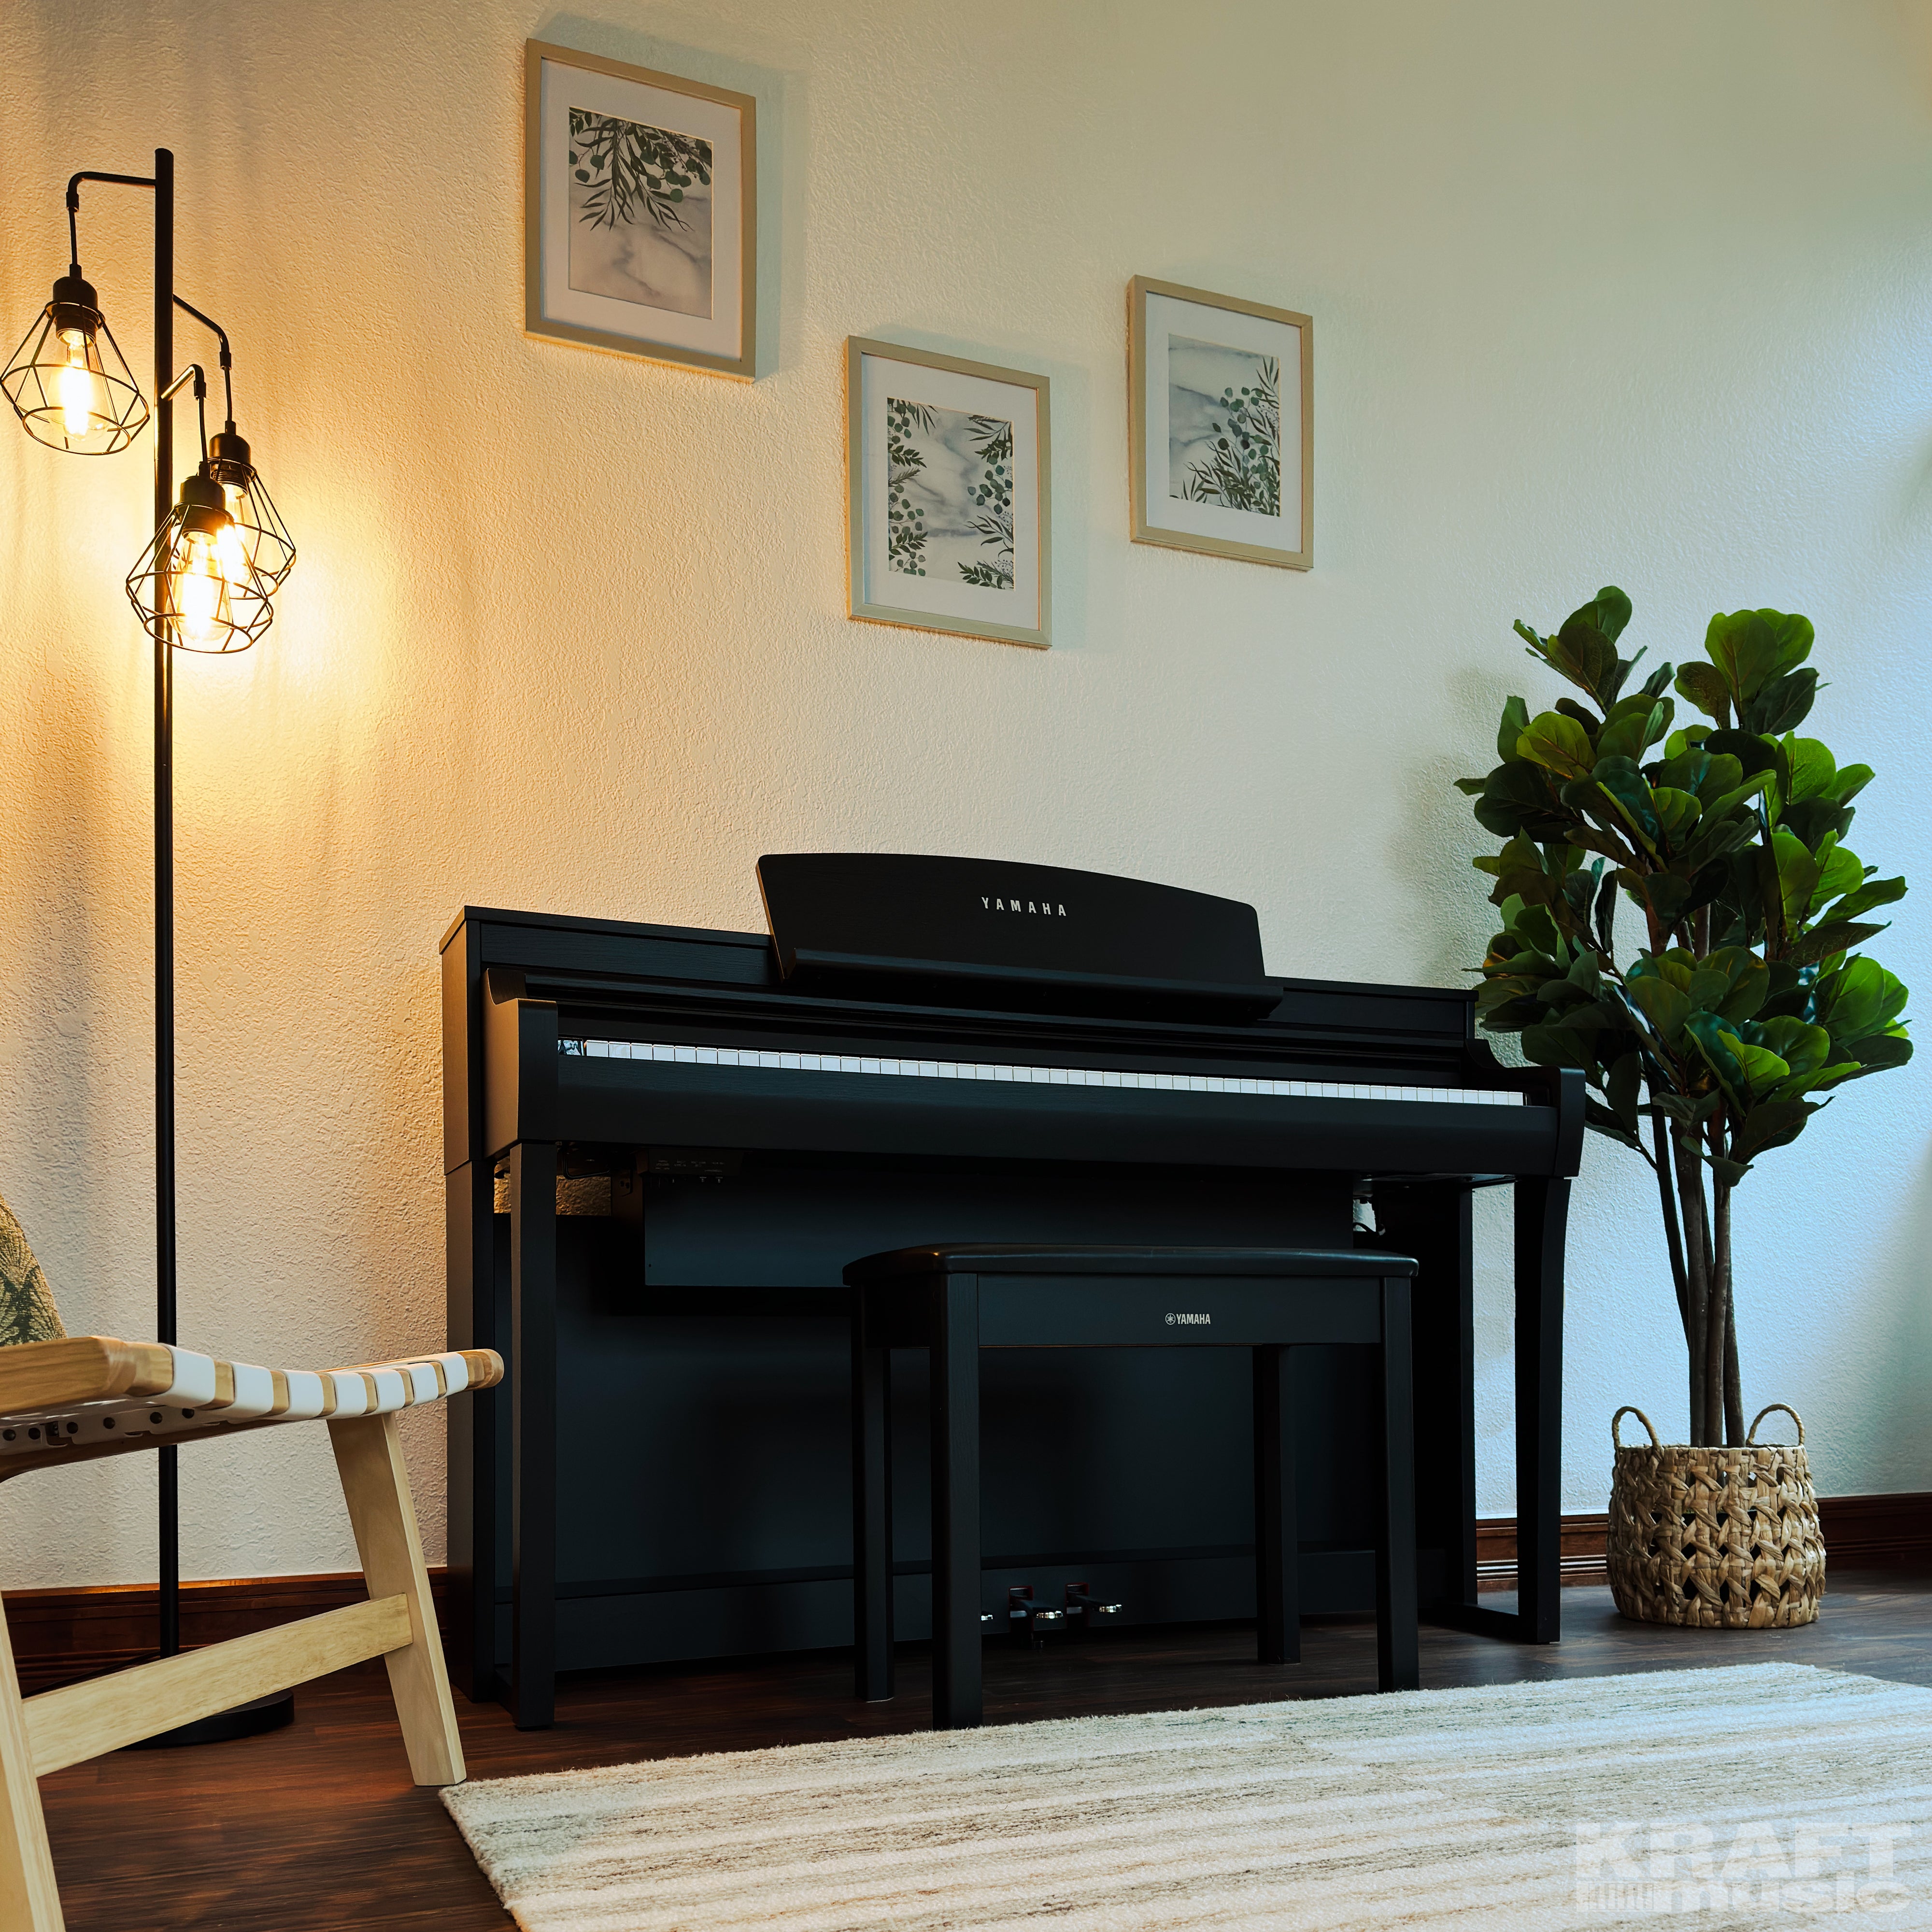 Yamaha Clavinova CSP-275 Digital Piano - Black Walnut - in a stylish living room facing right from below